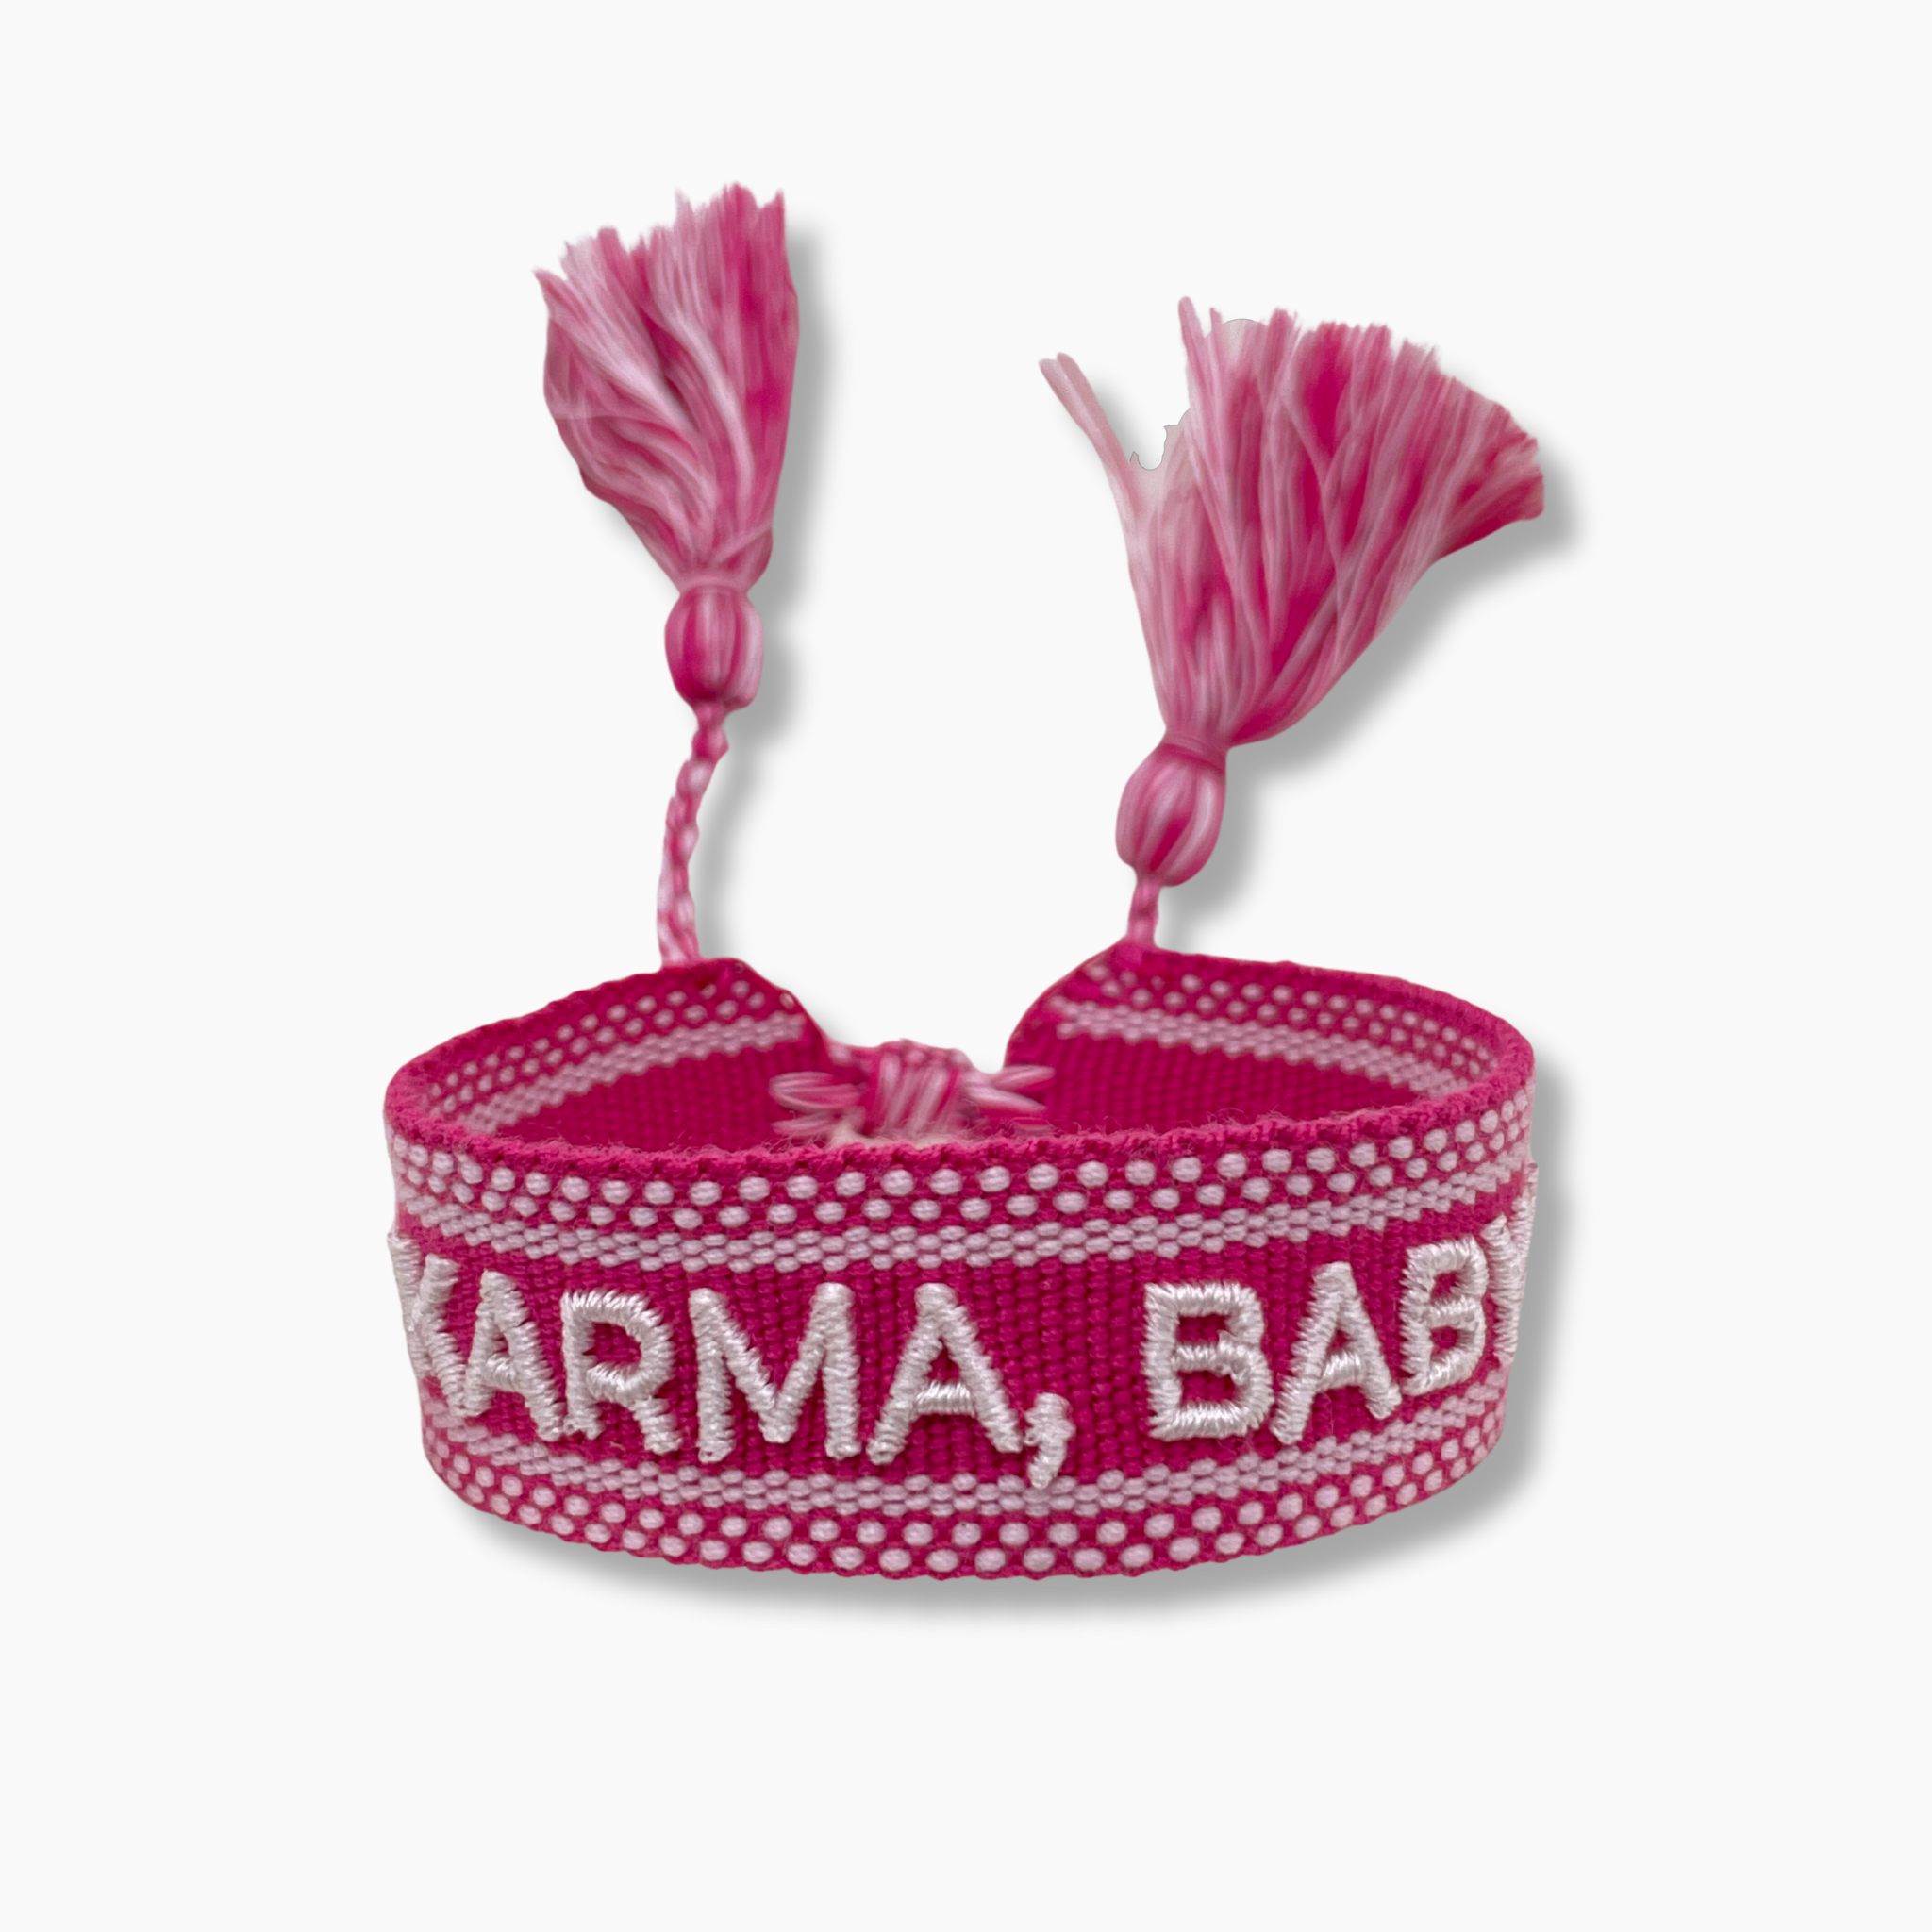 Festival Bracelet Karma, Baby!